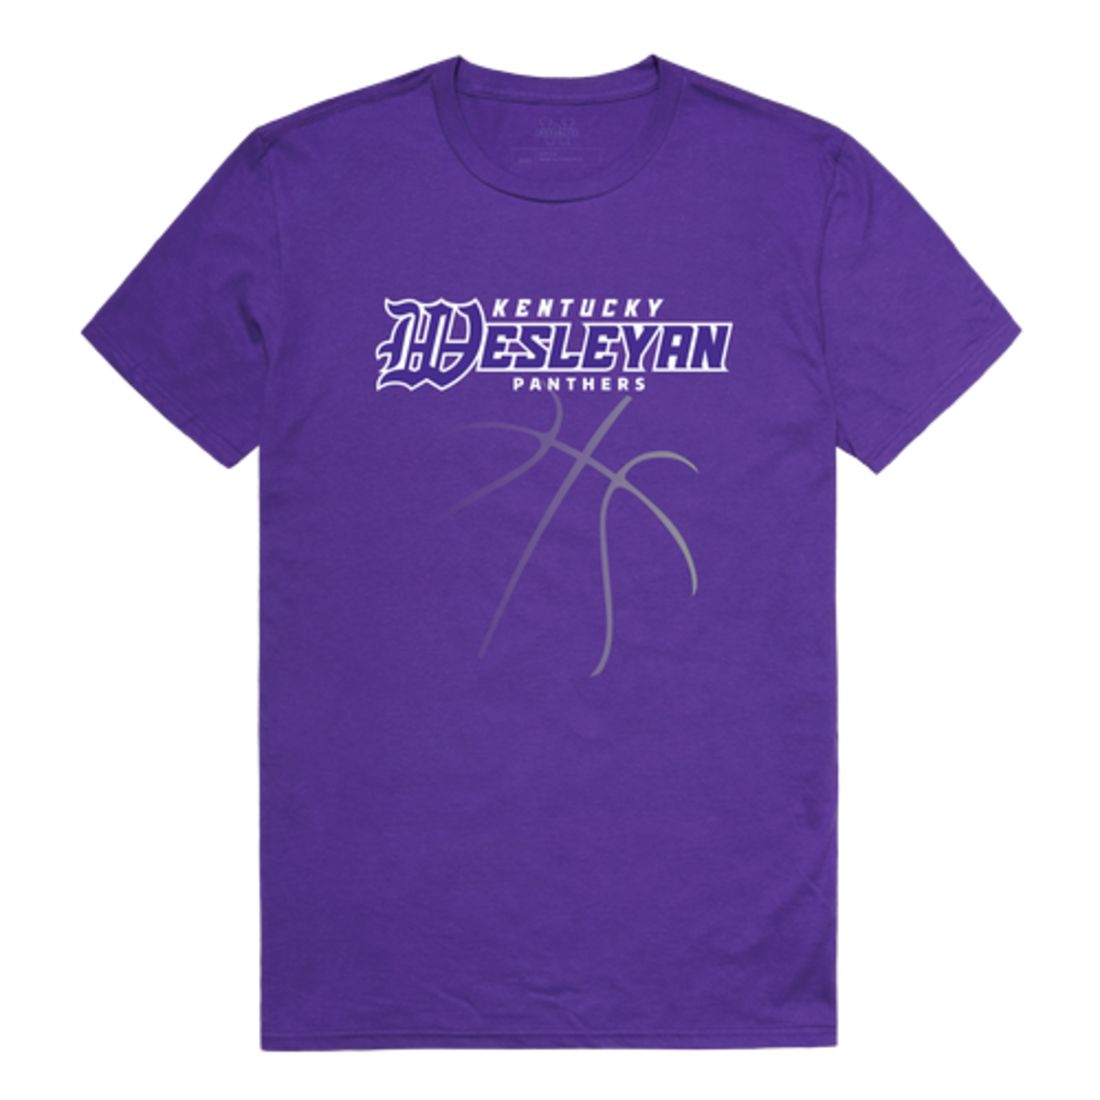 Kentucky Wesleyan College Panthers Basketball T-Shirt Tee